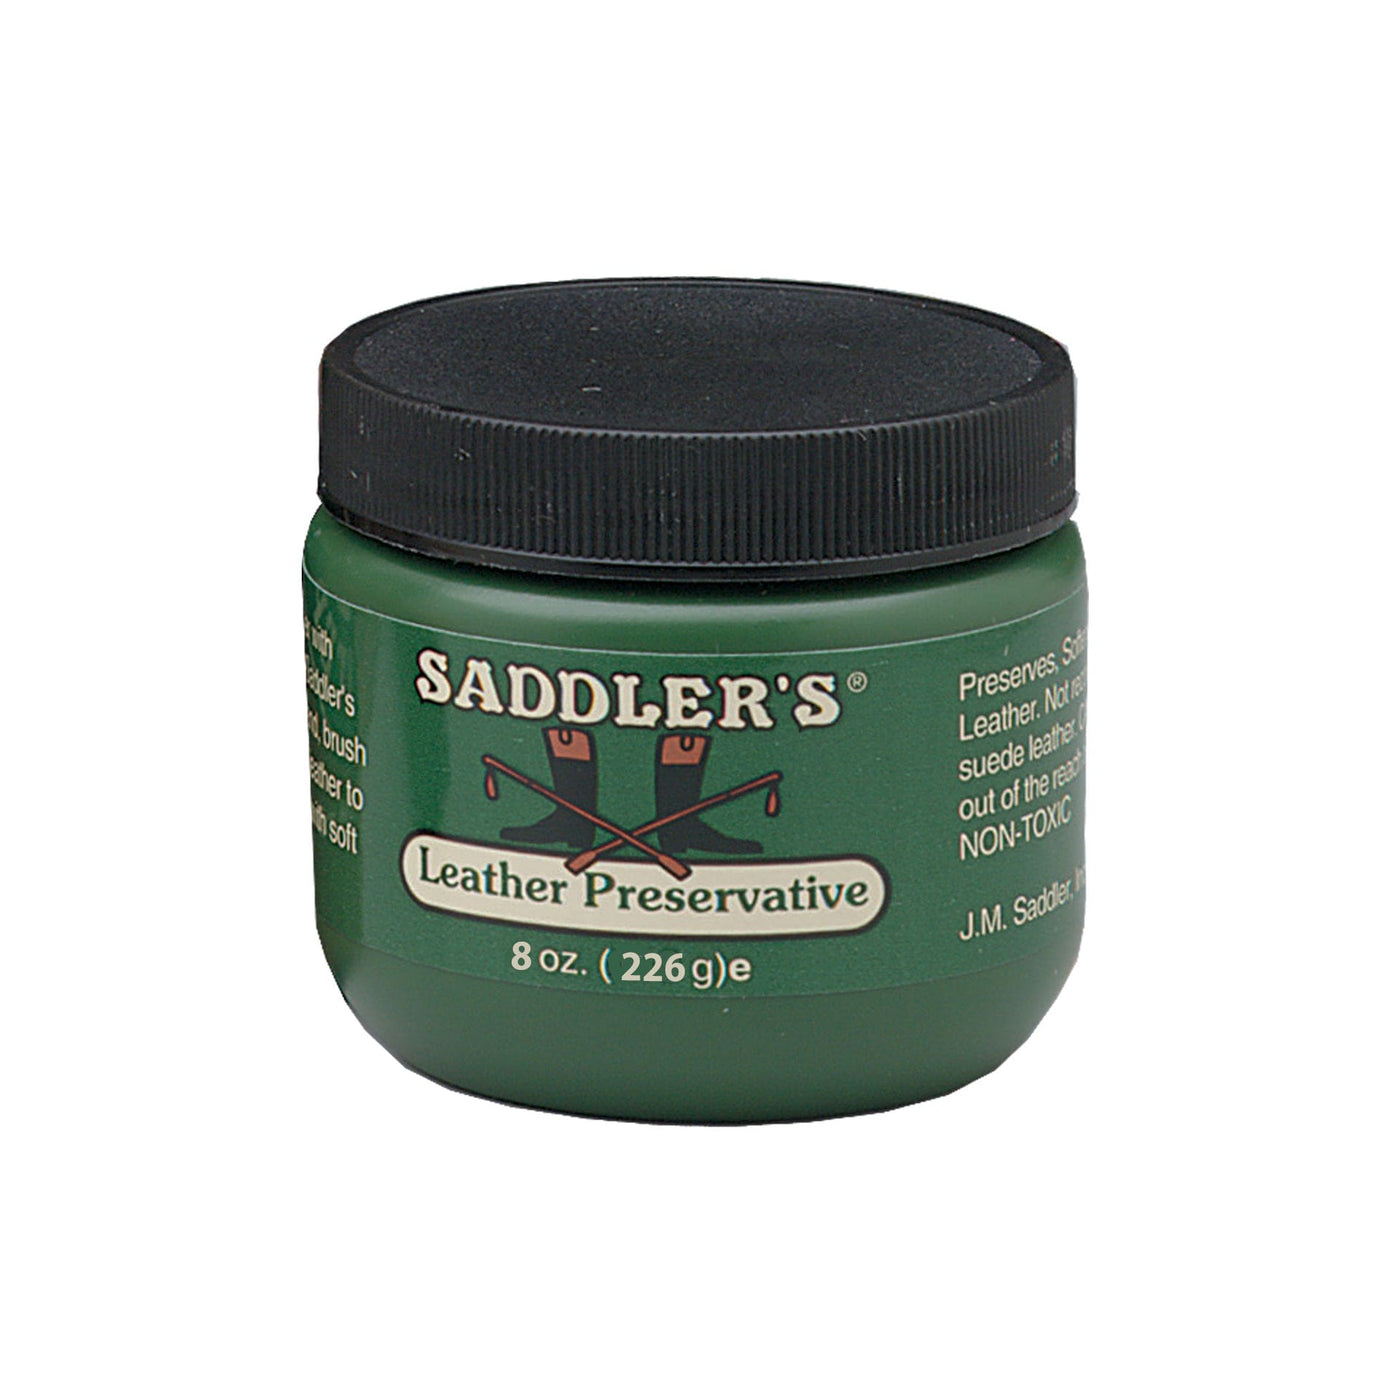  Saddler’s Preservative Leather Care -  leather preservative -  saddler's leather preserver -  lady conceal -  lady conceal leather care - 